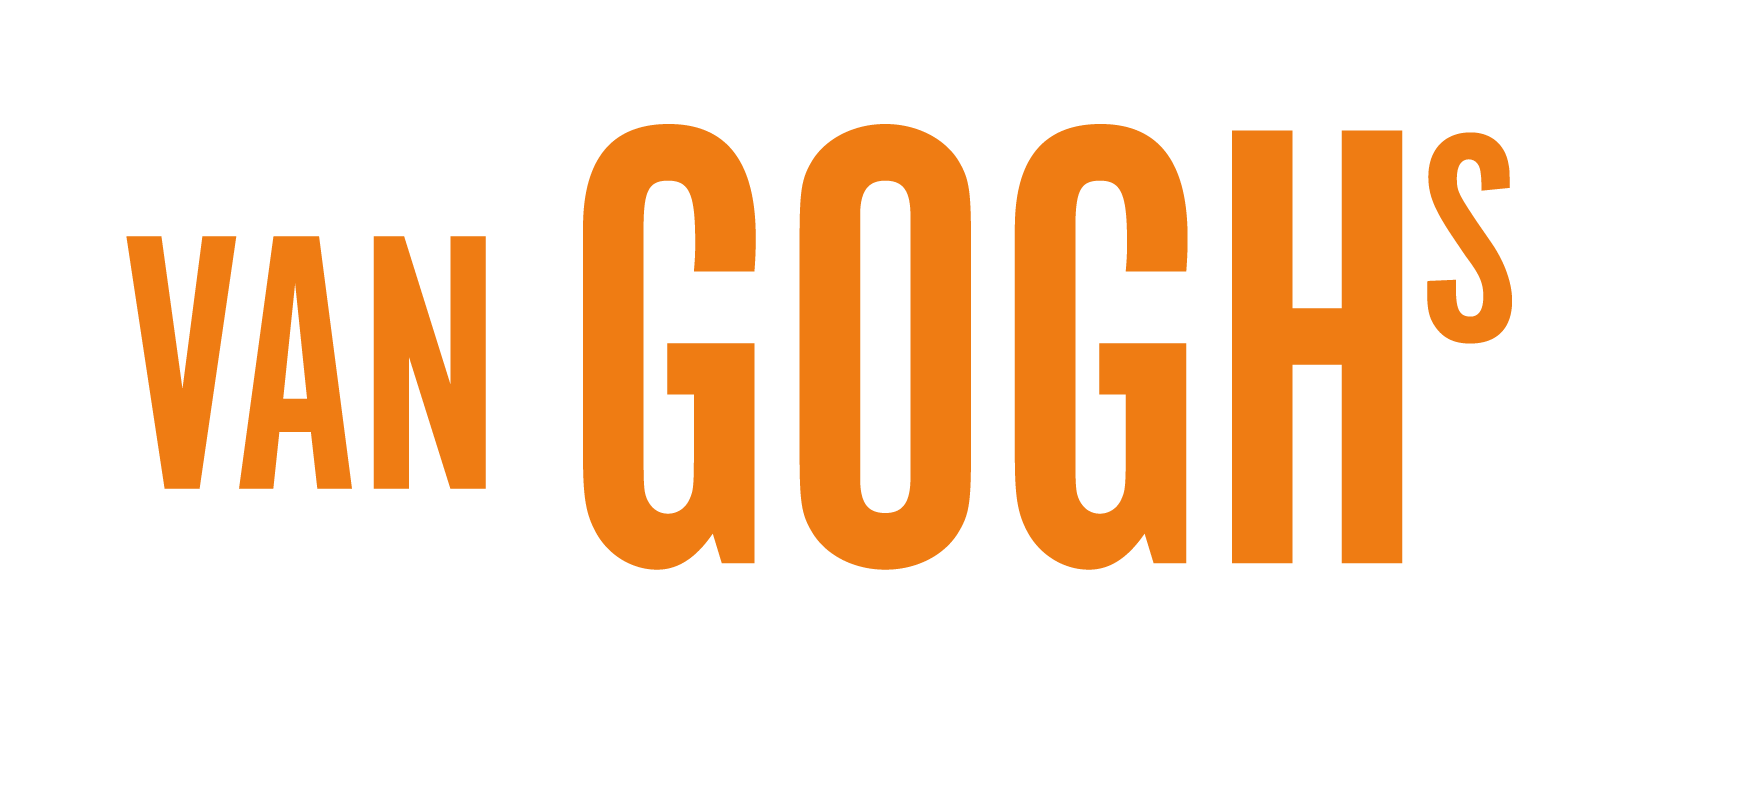 Van Gogh's complete fertilizers logo